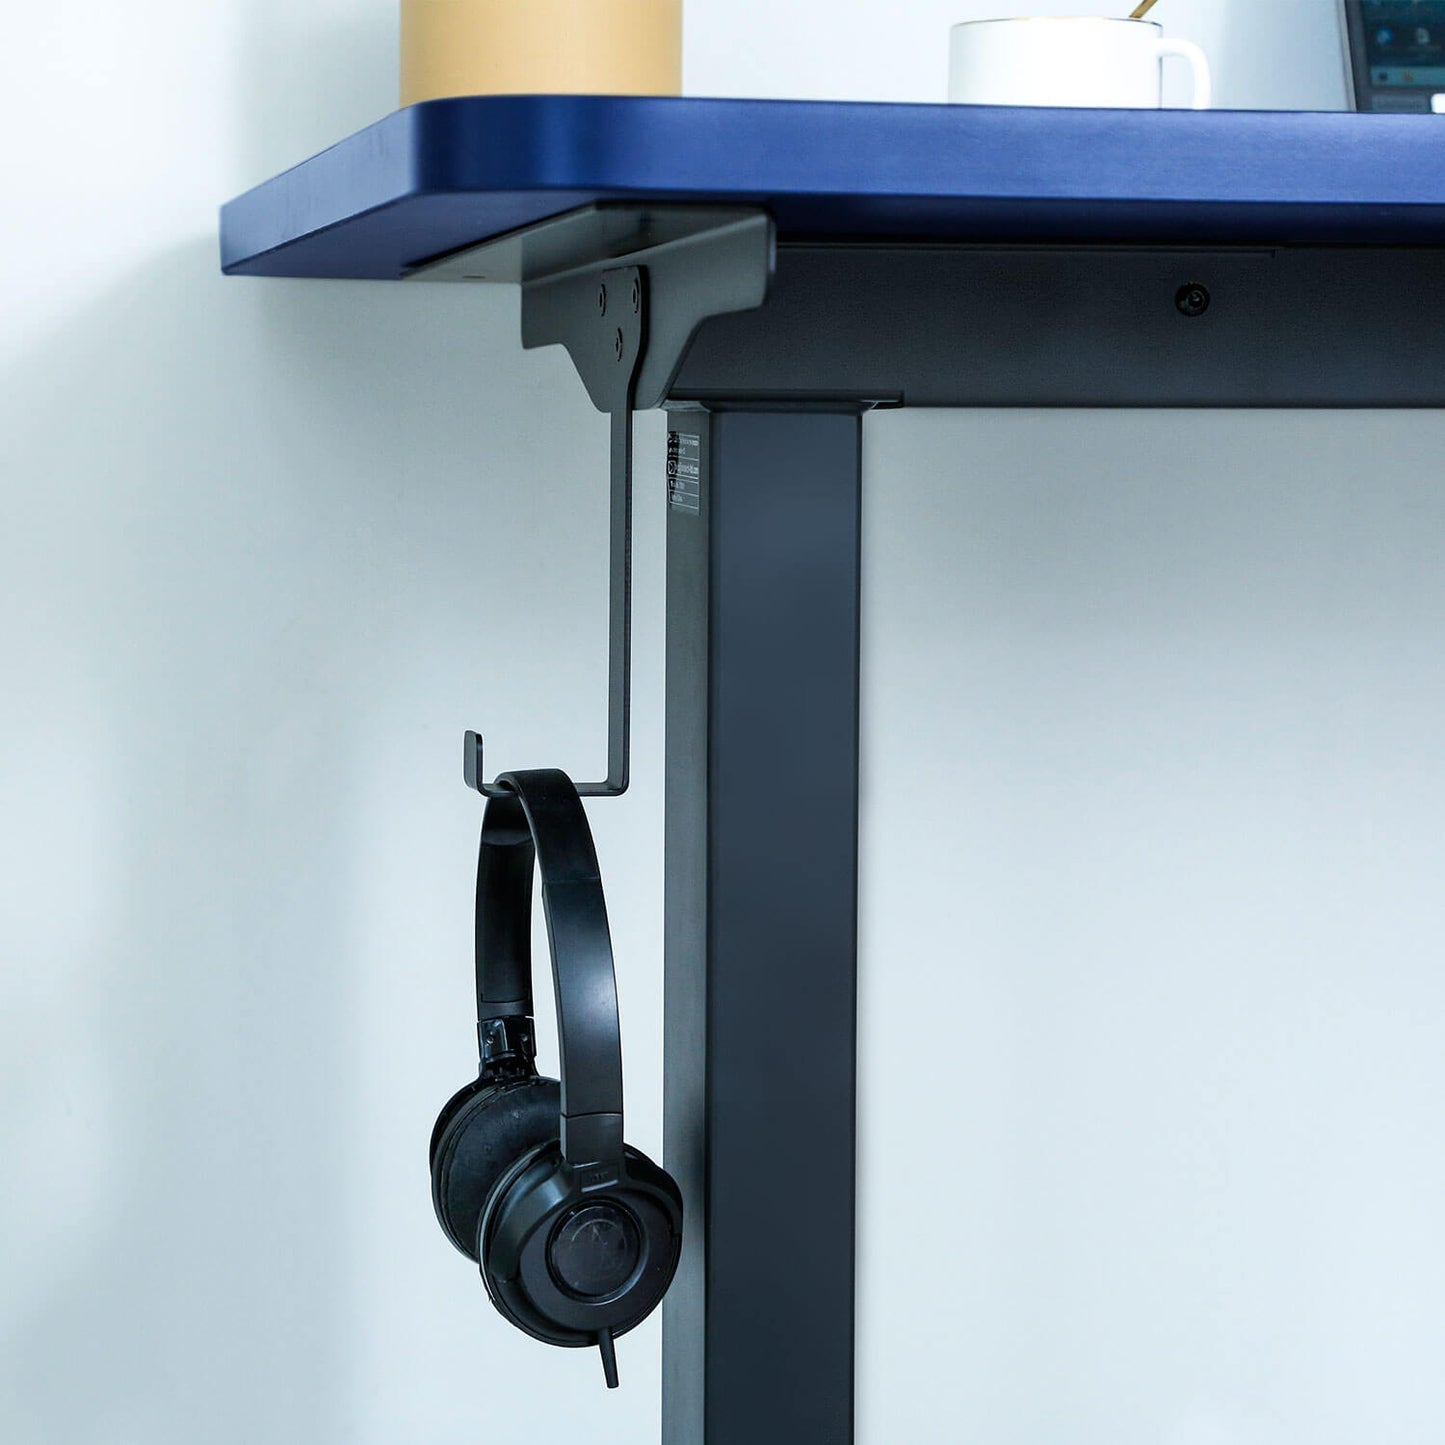 Blue Top adjustable standing desk to hang a headphone or bag